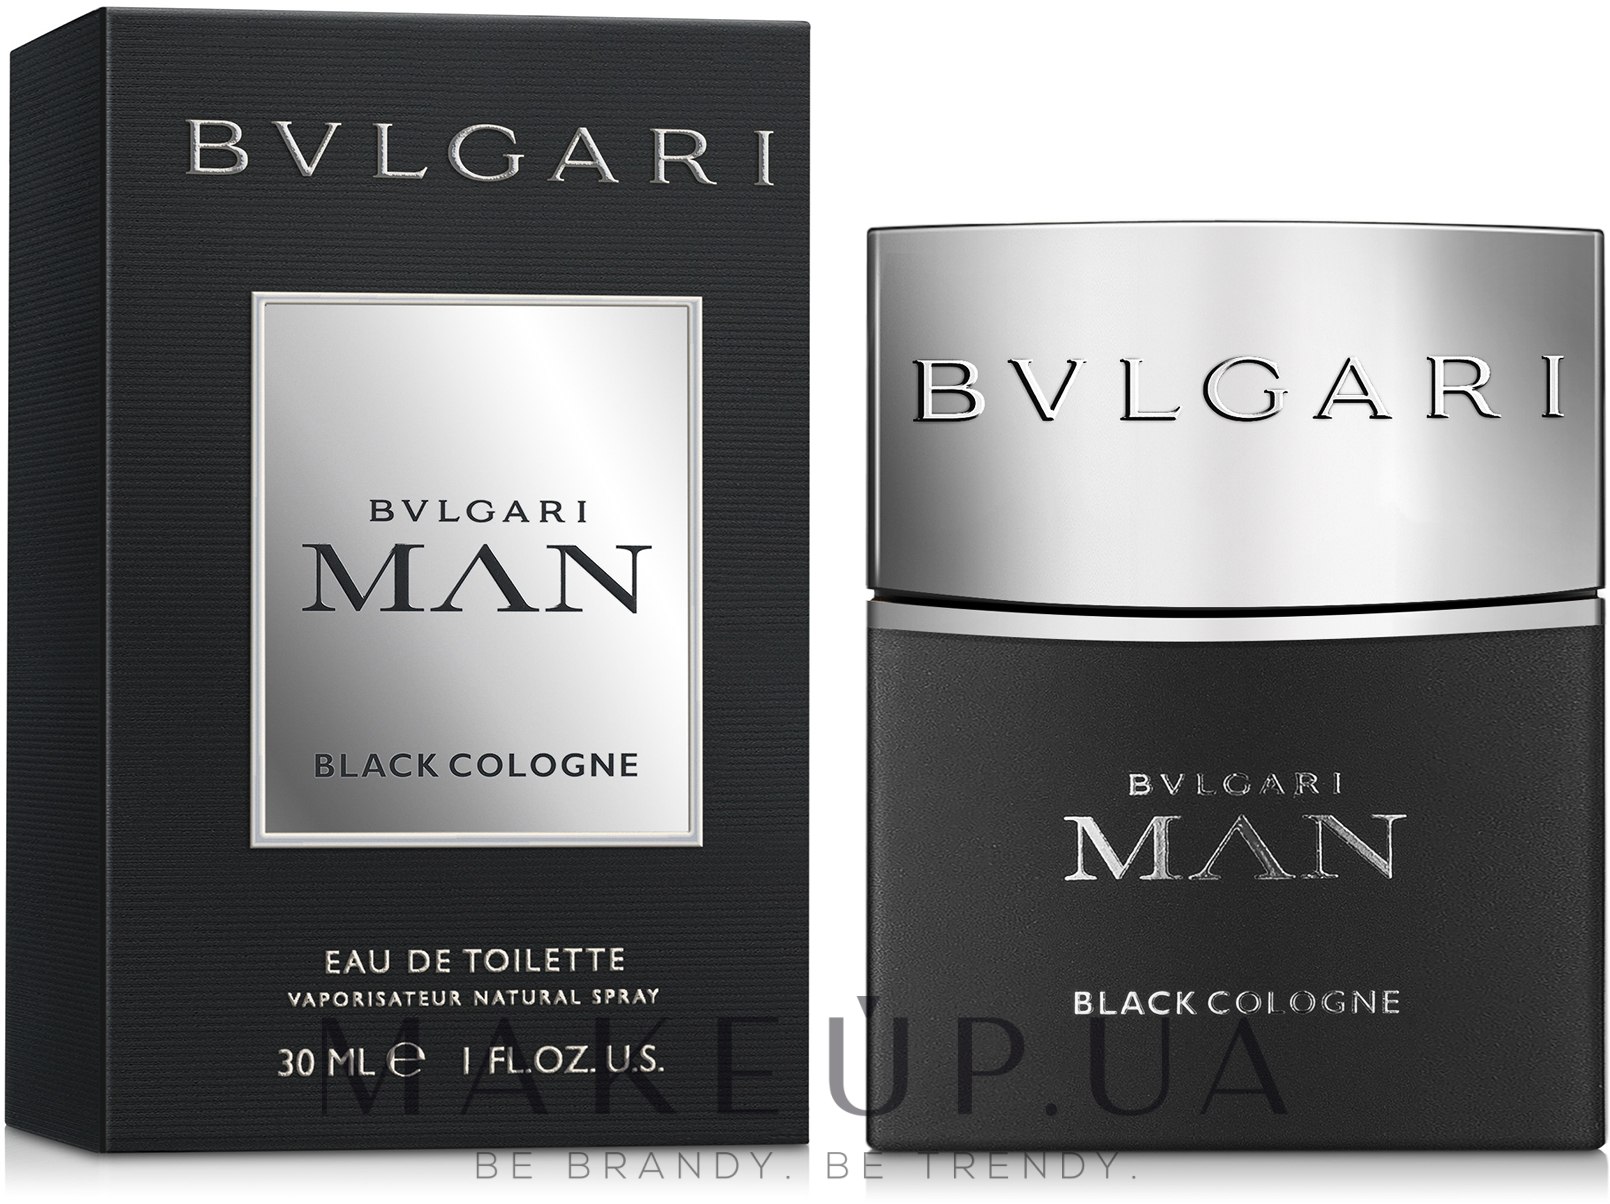 bvlgari black cologne 30ml